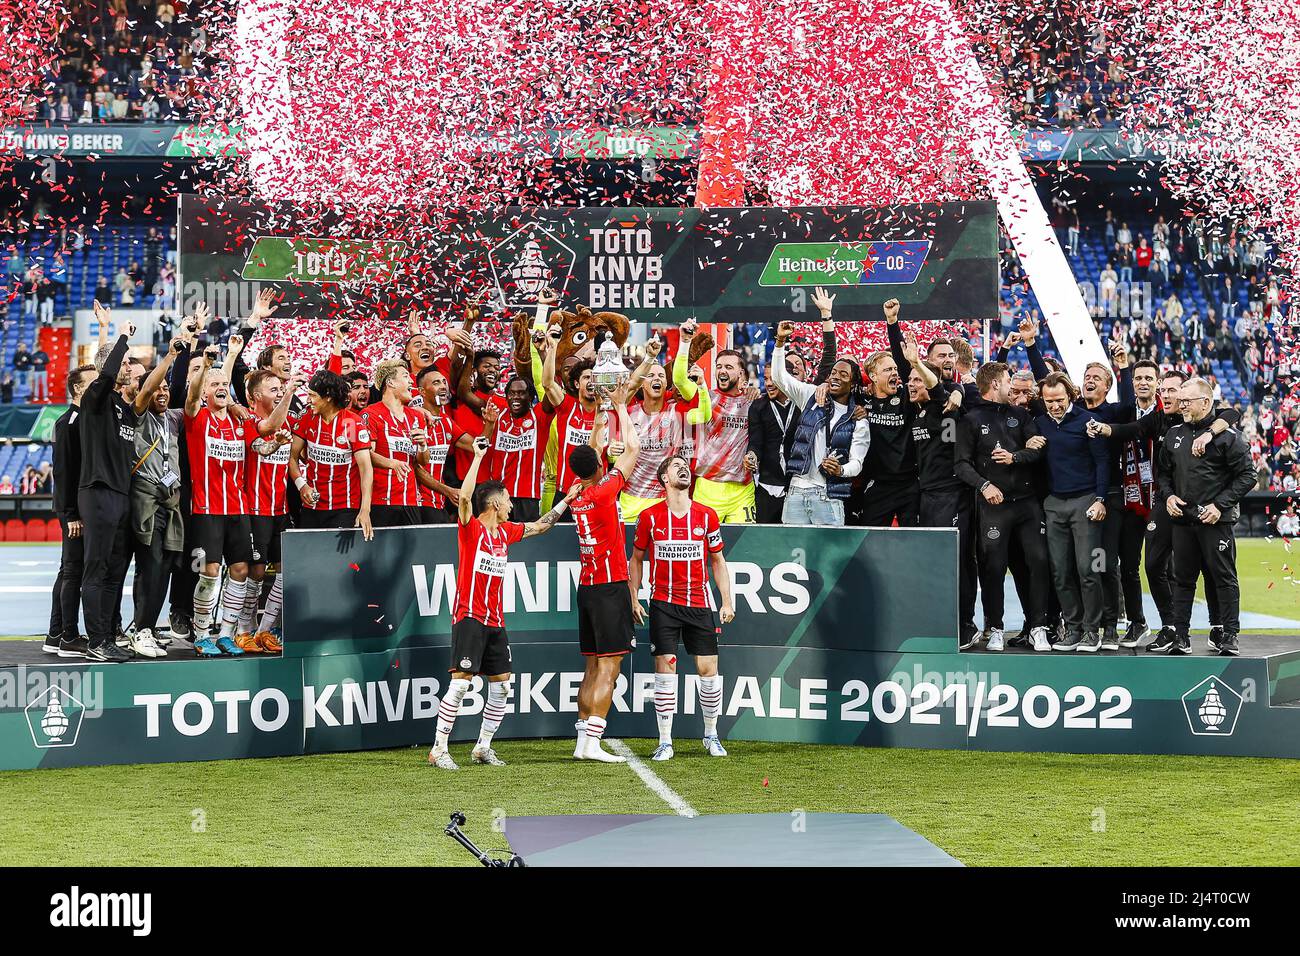 vrouw bloemblad archief ROTTERDAM, 17-04-2022, Stadion de Kuip , season 2020 / 2021 TOTO KNVB Beker  , Dutch Football between PSV and Ajax. Final score 2-1. PSV wins cup (Photo  by Pro Shots/Sipa USA) ***